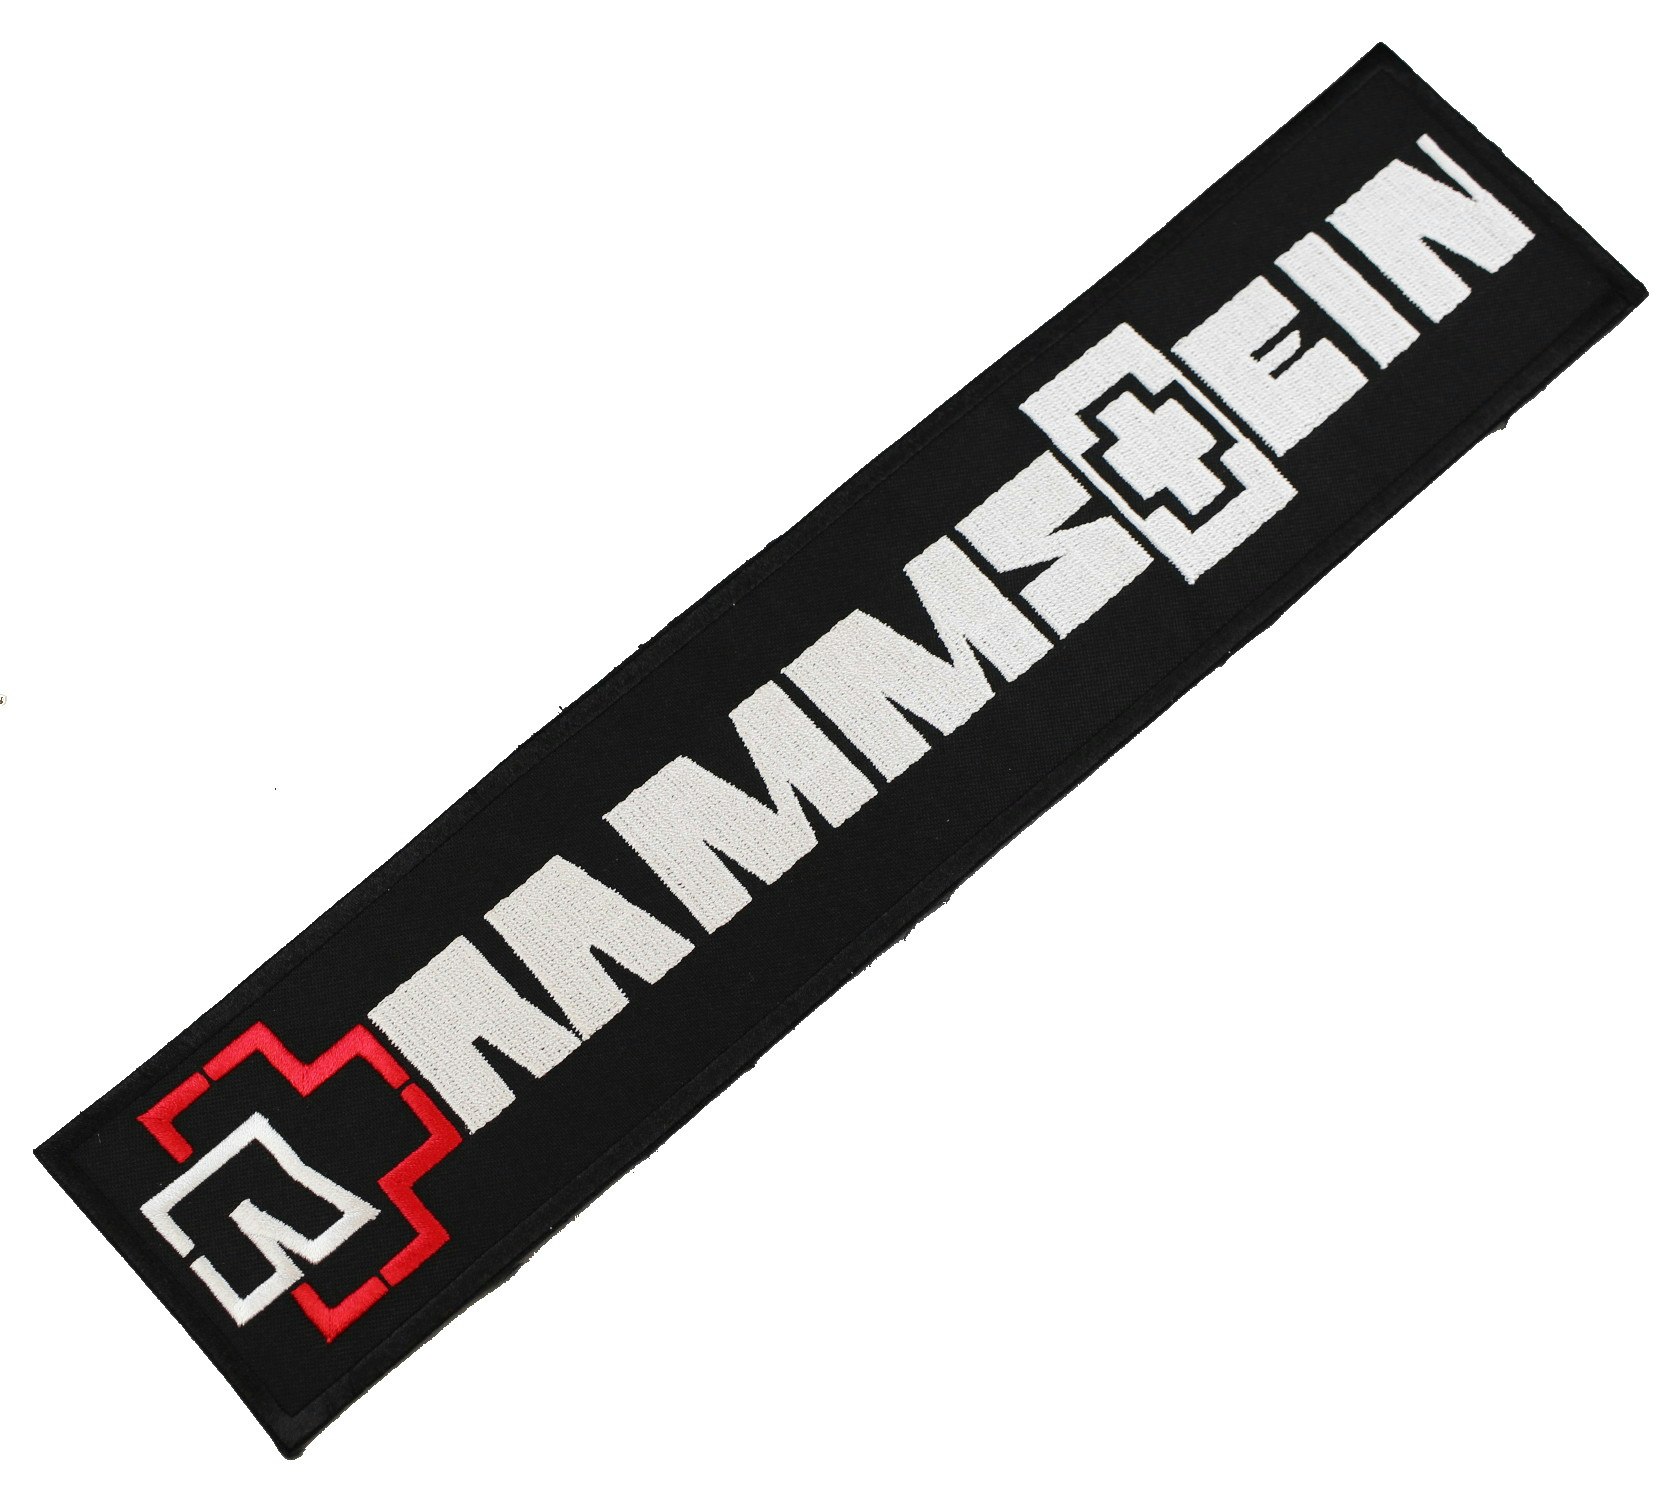 Rammstein logo XL patch